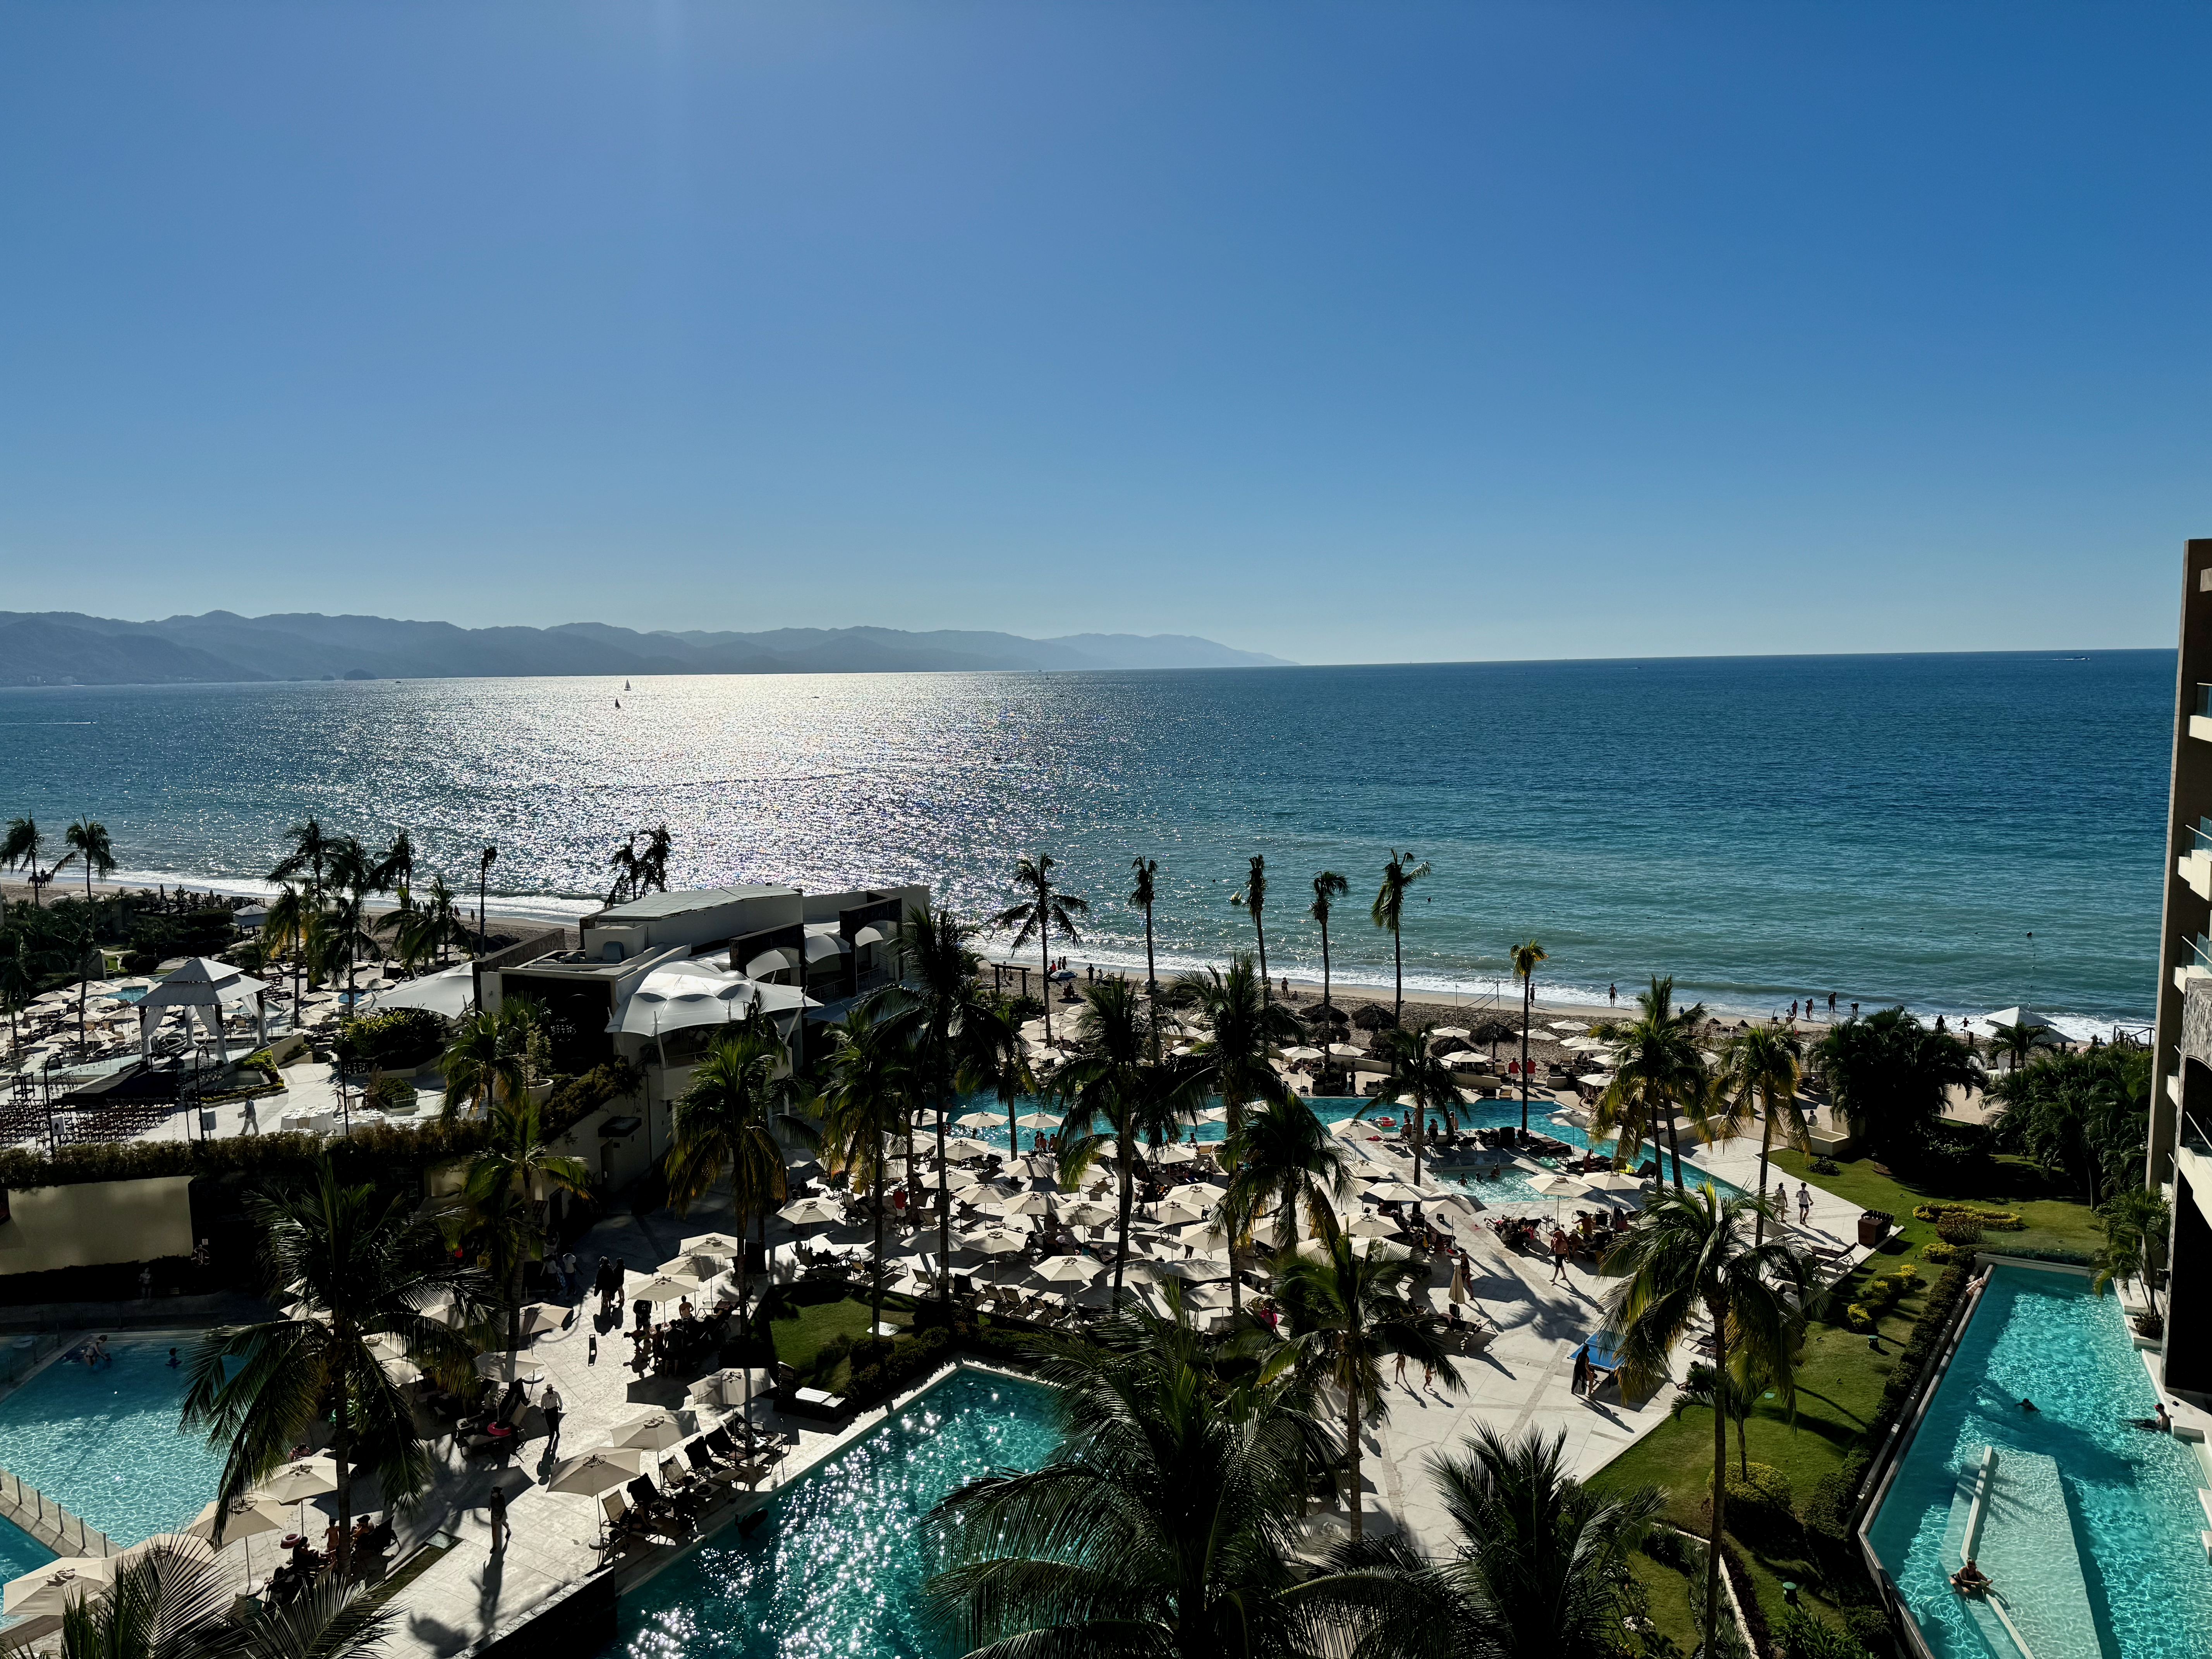 Picture of Dreams Resort Puerto Vallarta from balcony